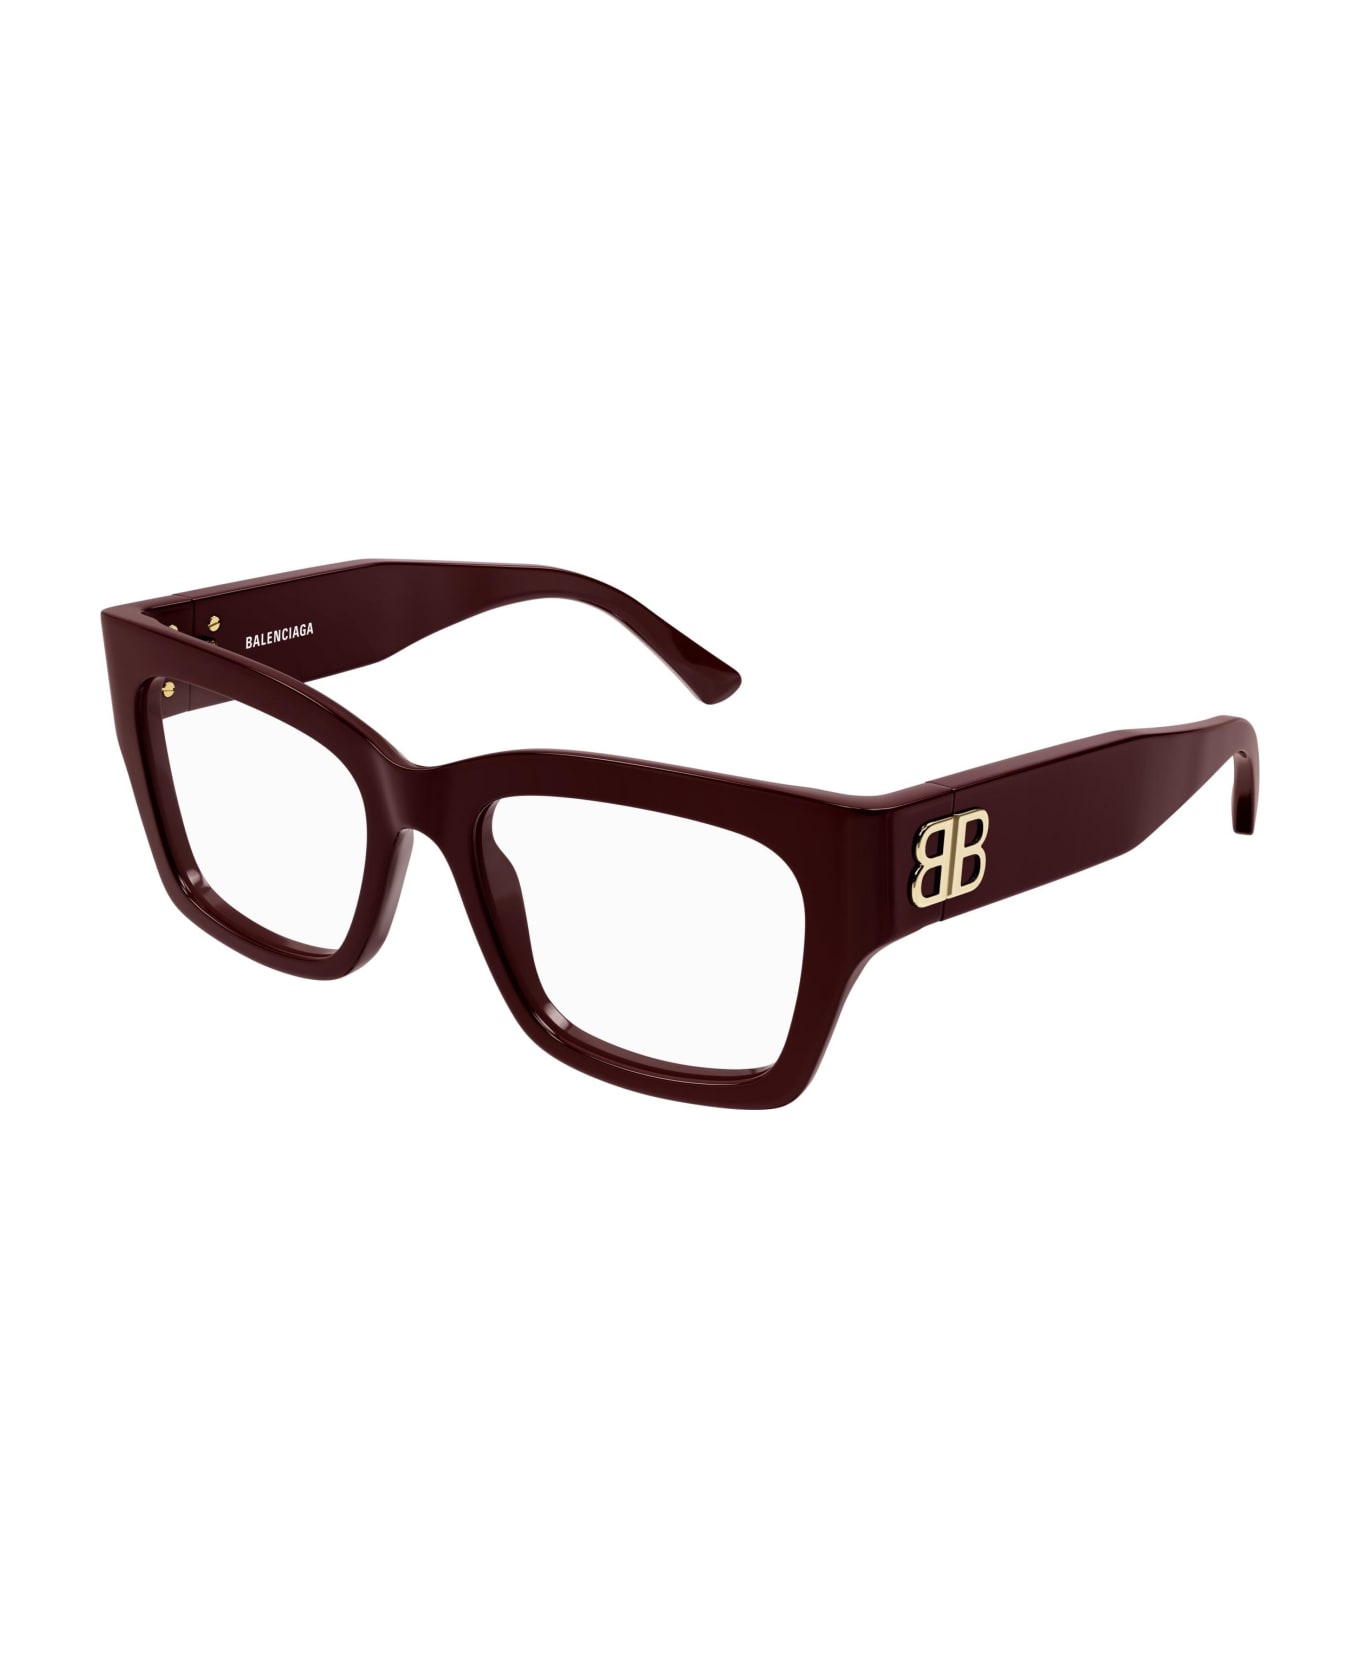 Balenciaga Eyewear Glasses - Burgundy アイウェア